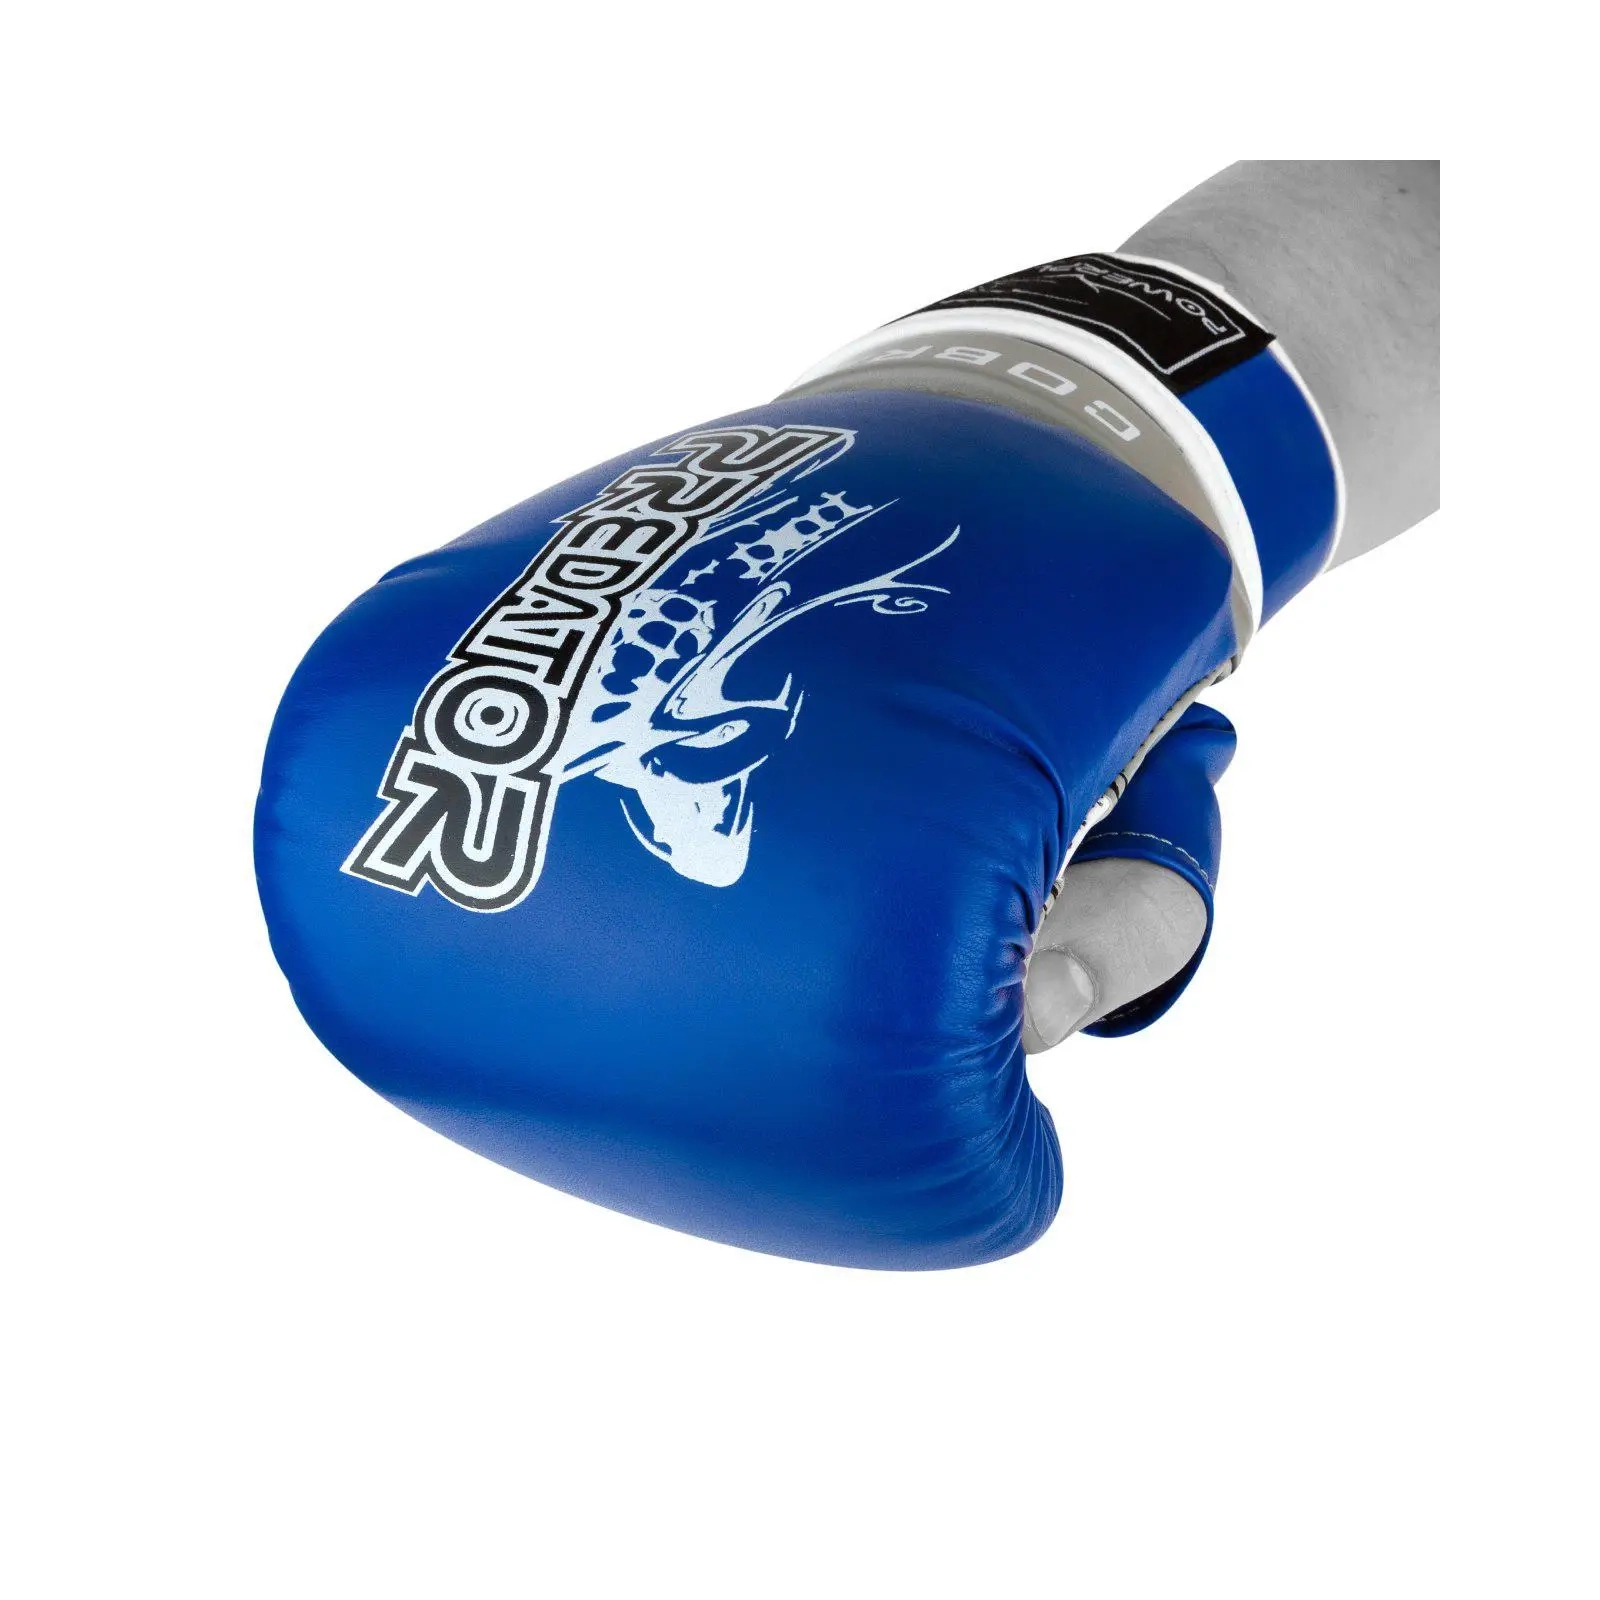 Снарядные перчатки PowerPlay 3038 Синьо-Сірі L (PP_3038_L_Blue/Grey) изображение 6